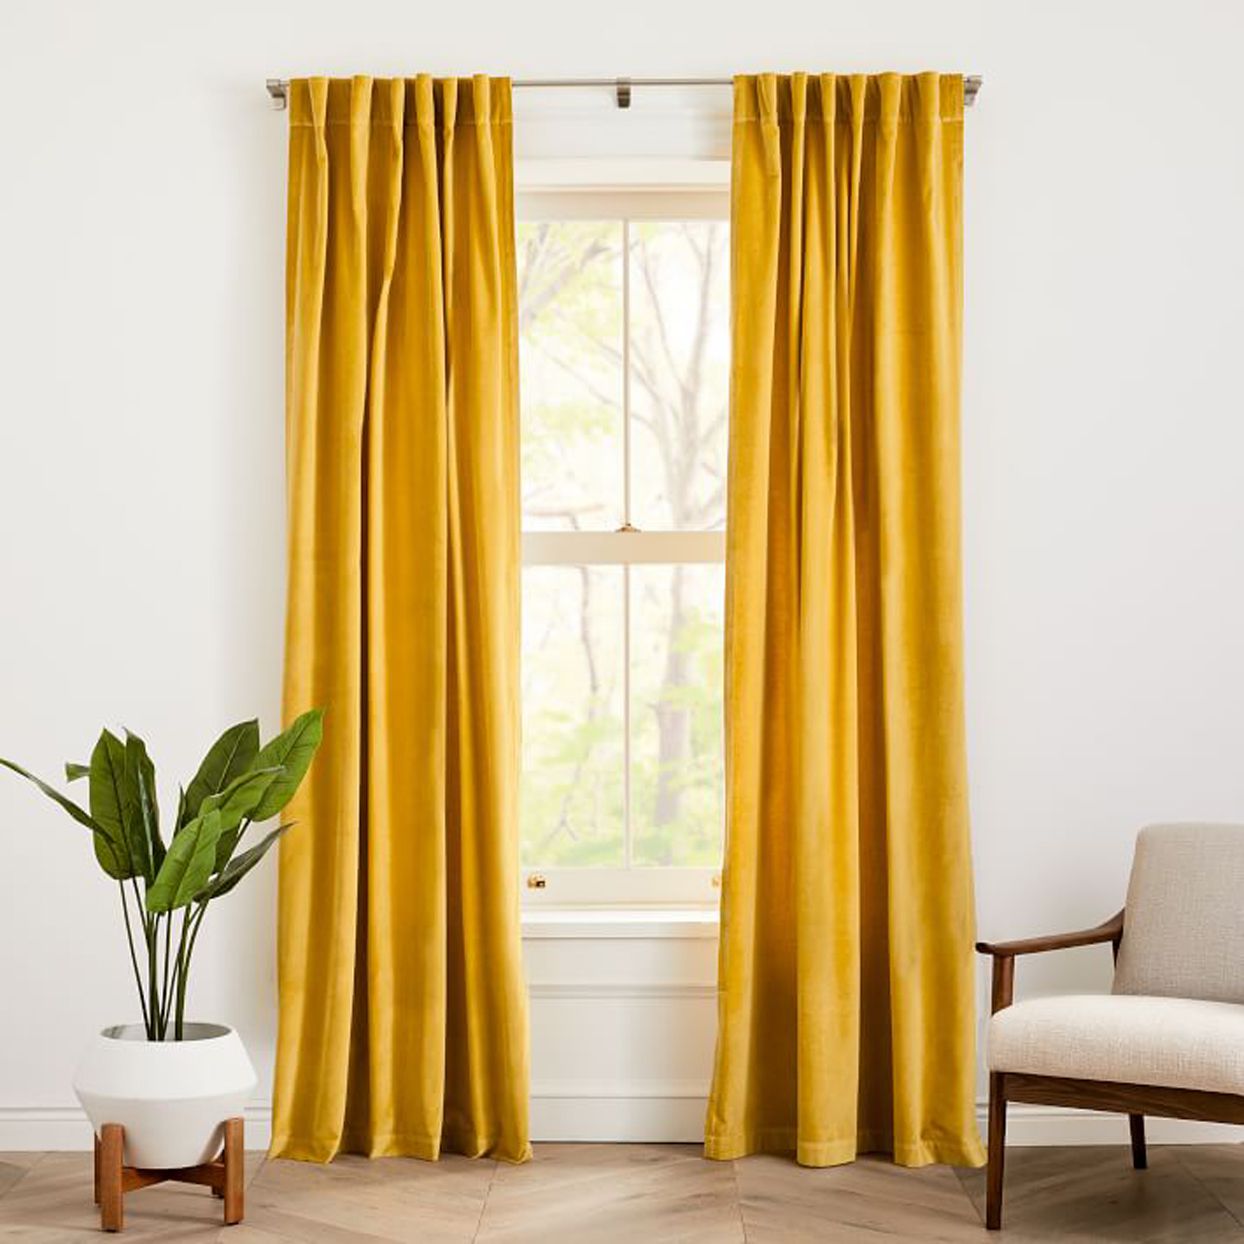 The Best Living Room Curtain Ideas | Martha Stewart